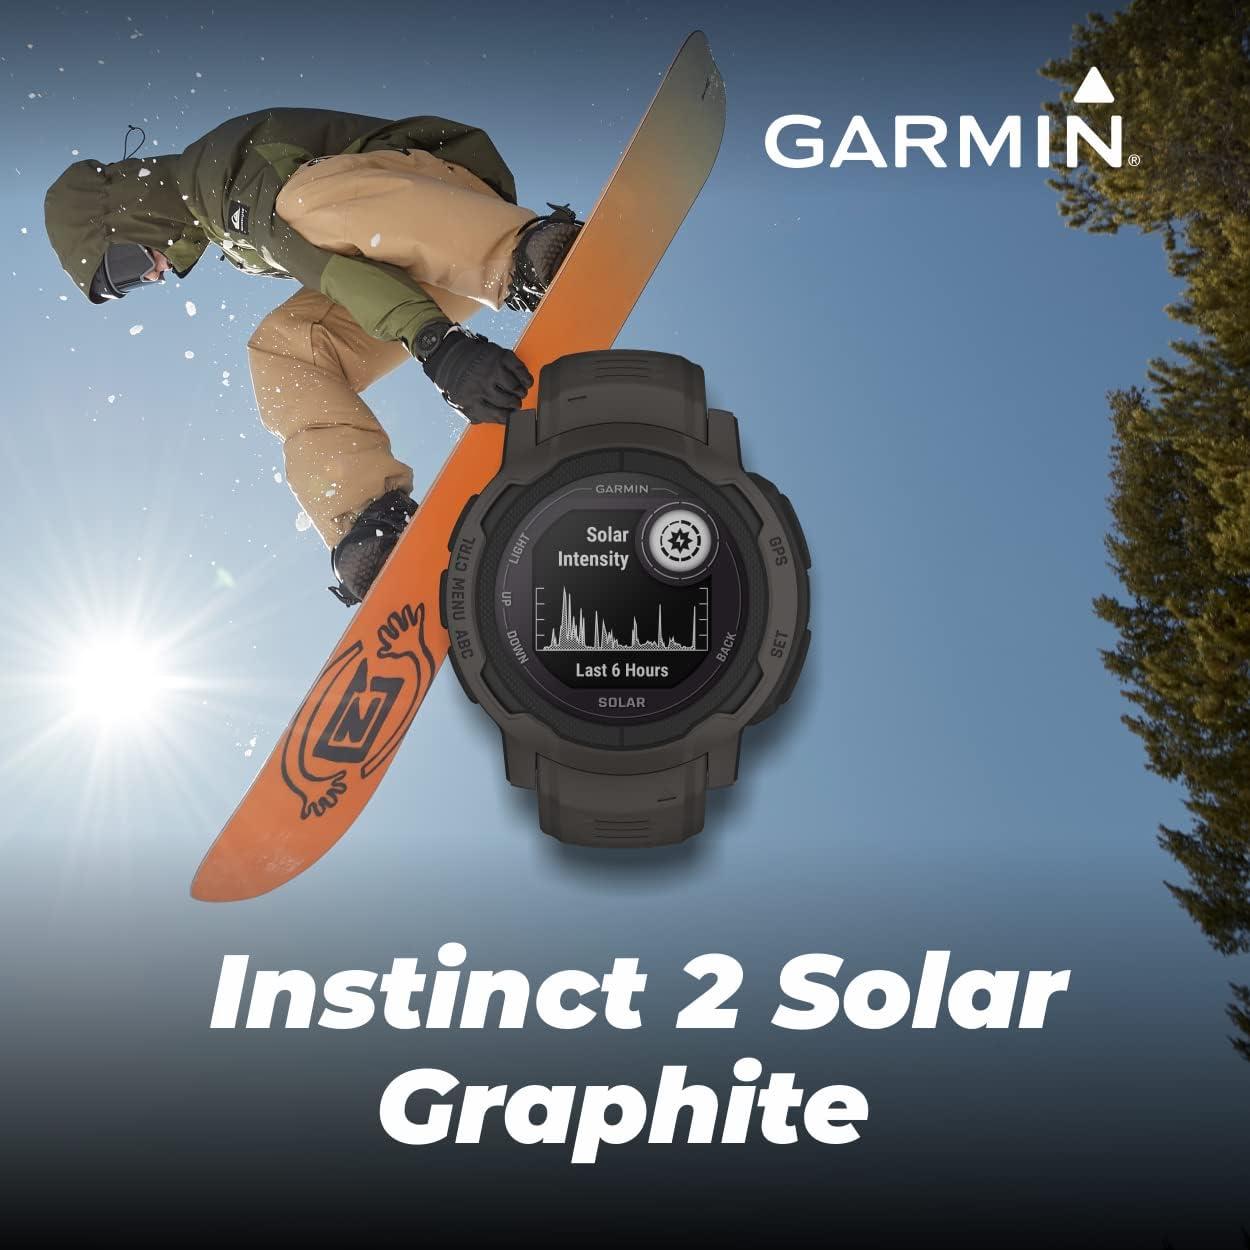 Garmin Instinct 2 Solar Graphite